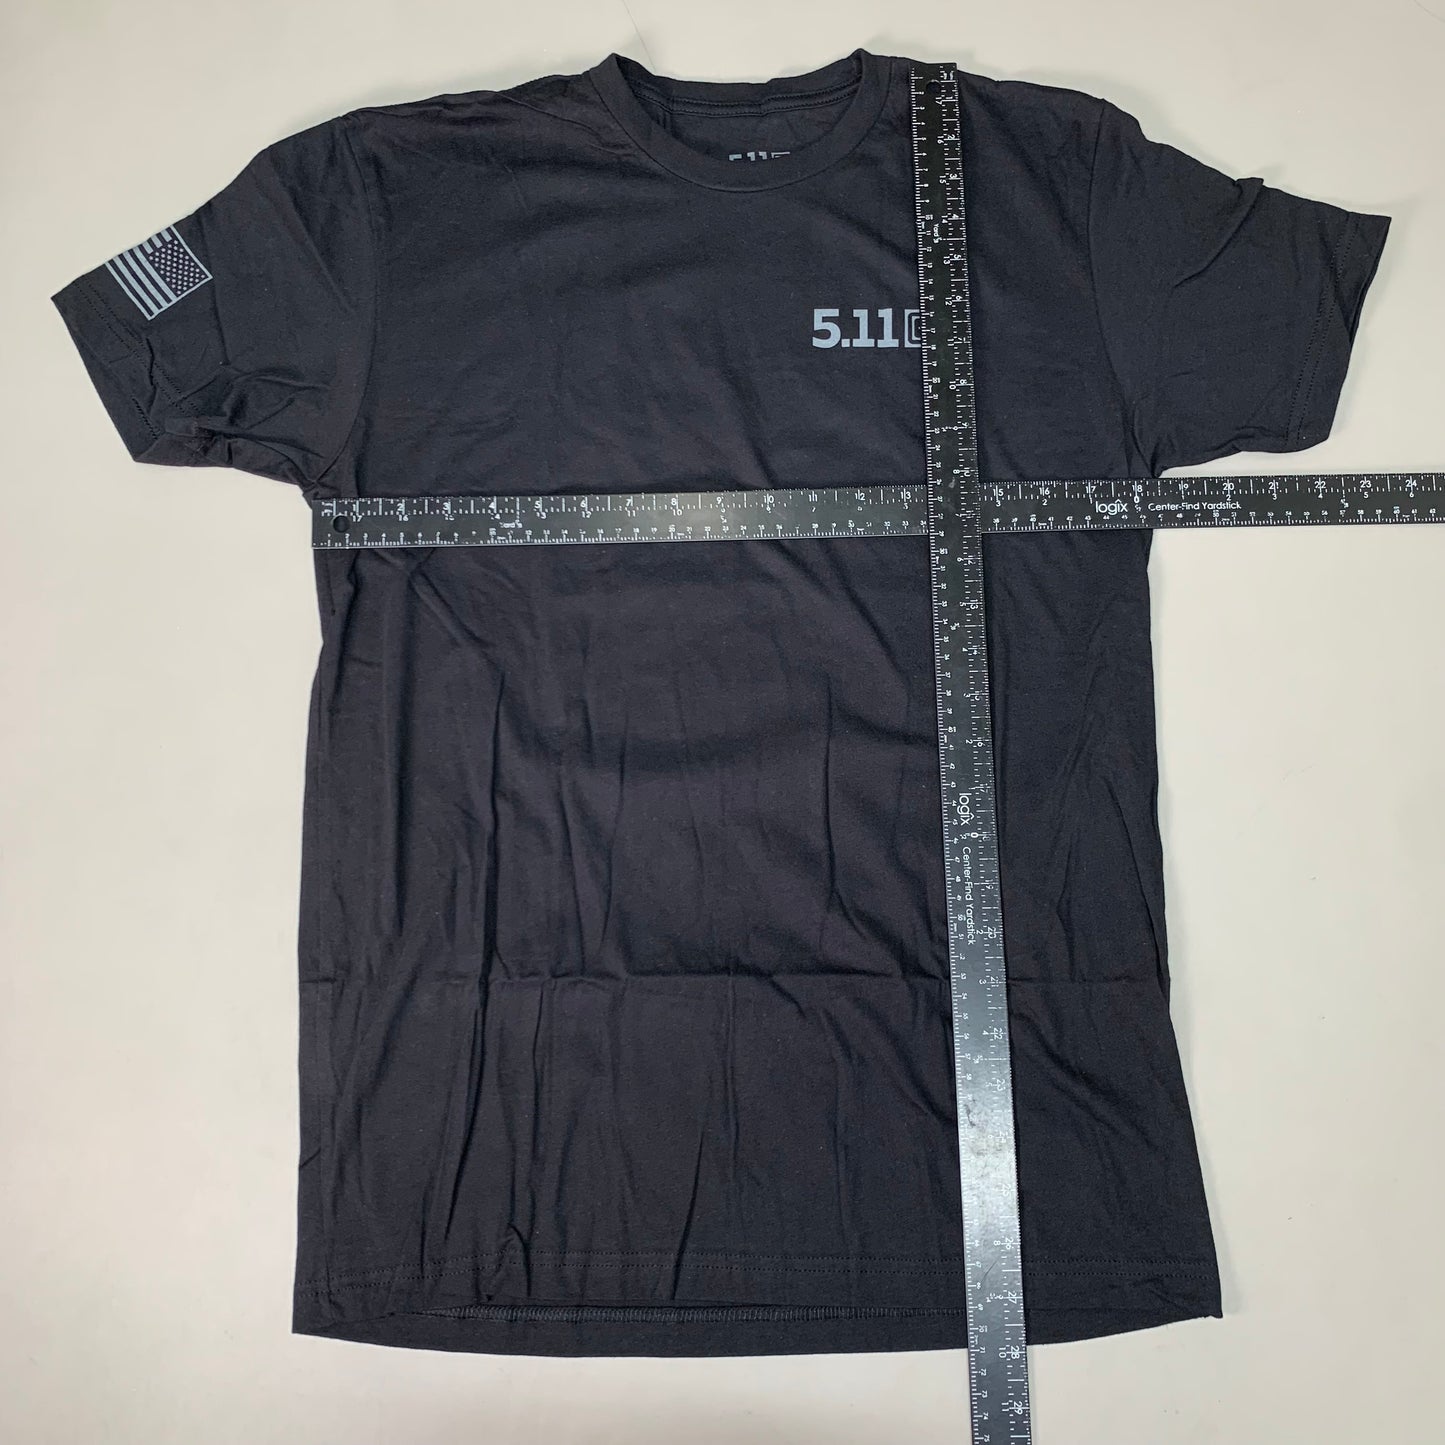 5.11 TACTICAL All Bark All Bite T-Shirt 100% Cotton 019 Black Sz M #76330